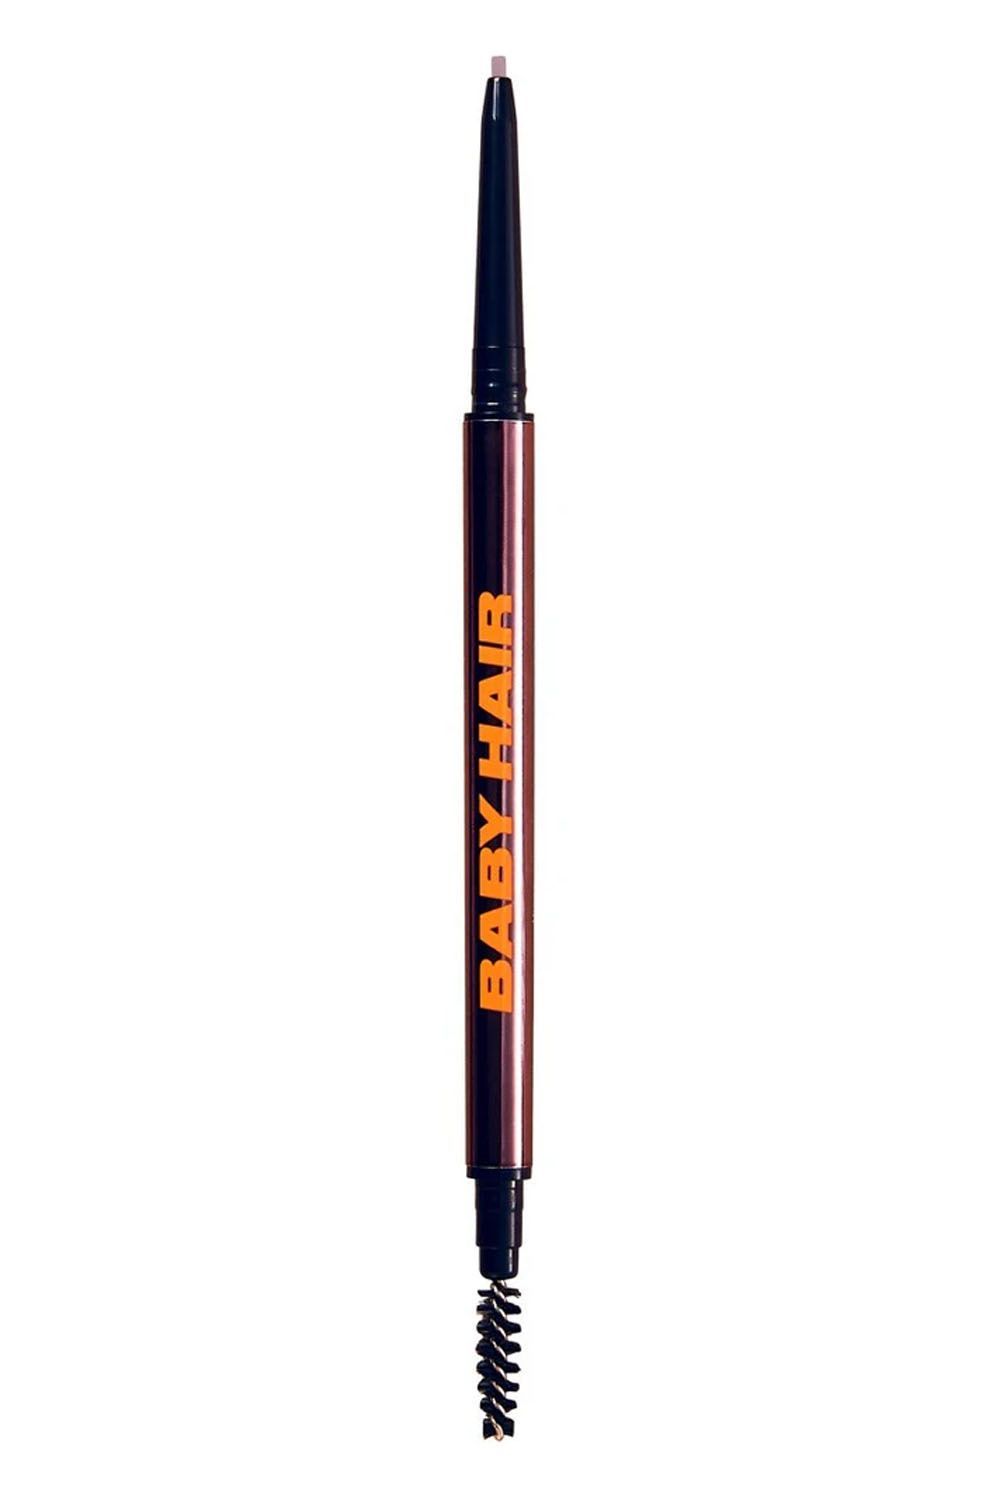 best eyebrow pencil for sensitive skin